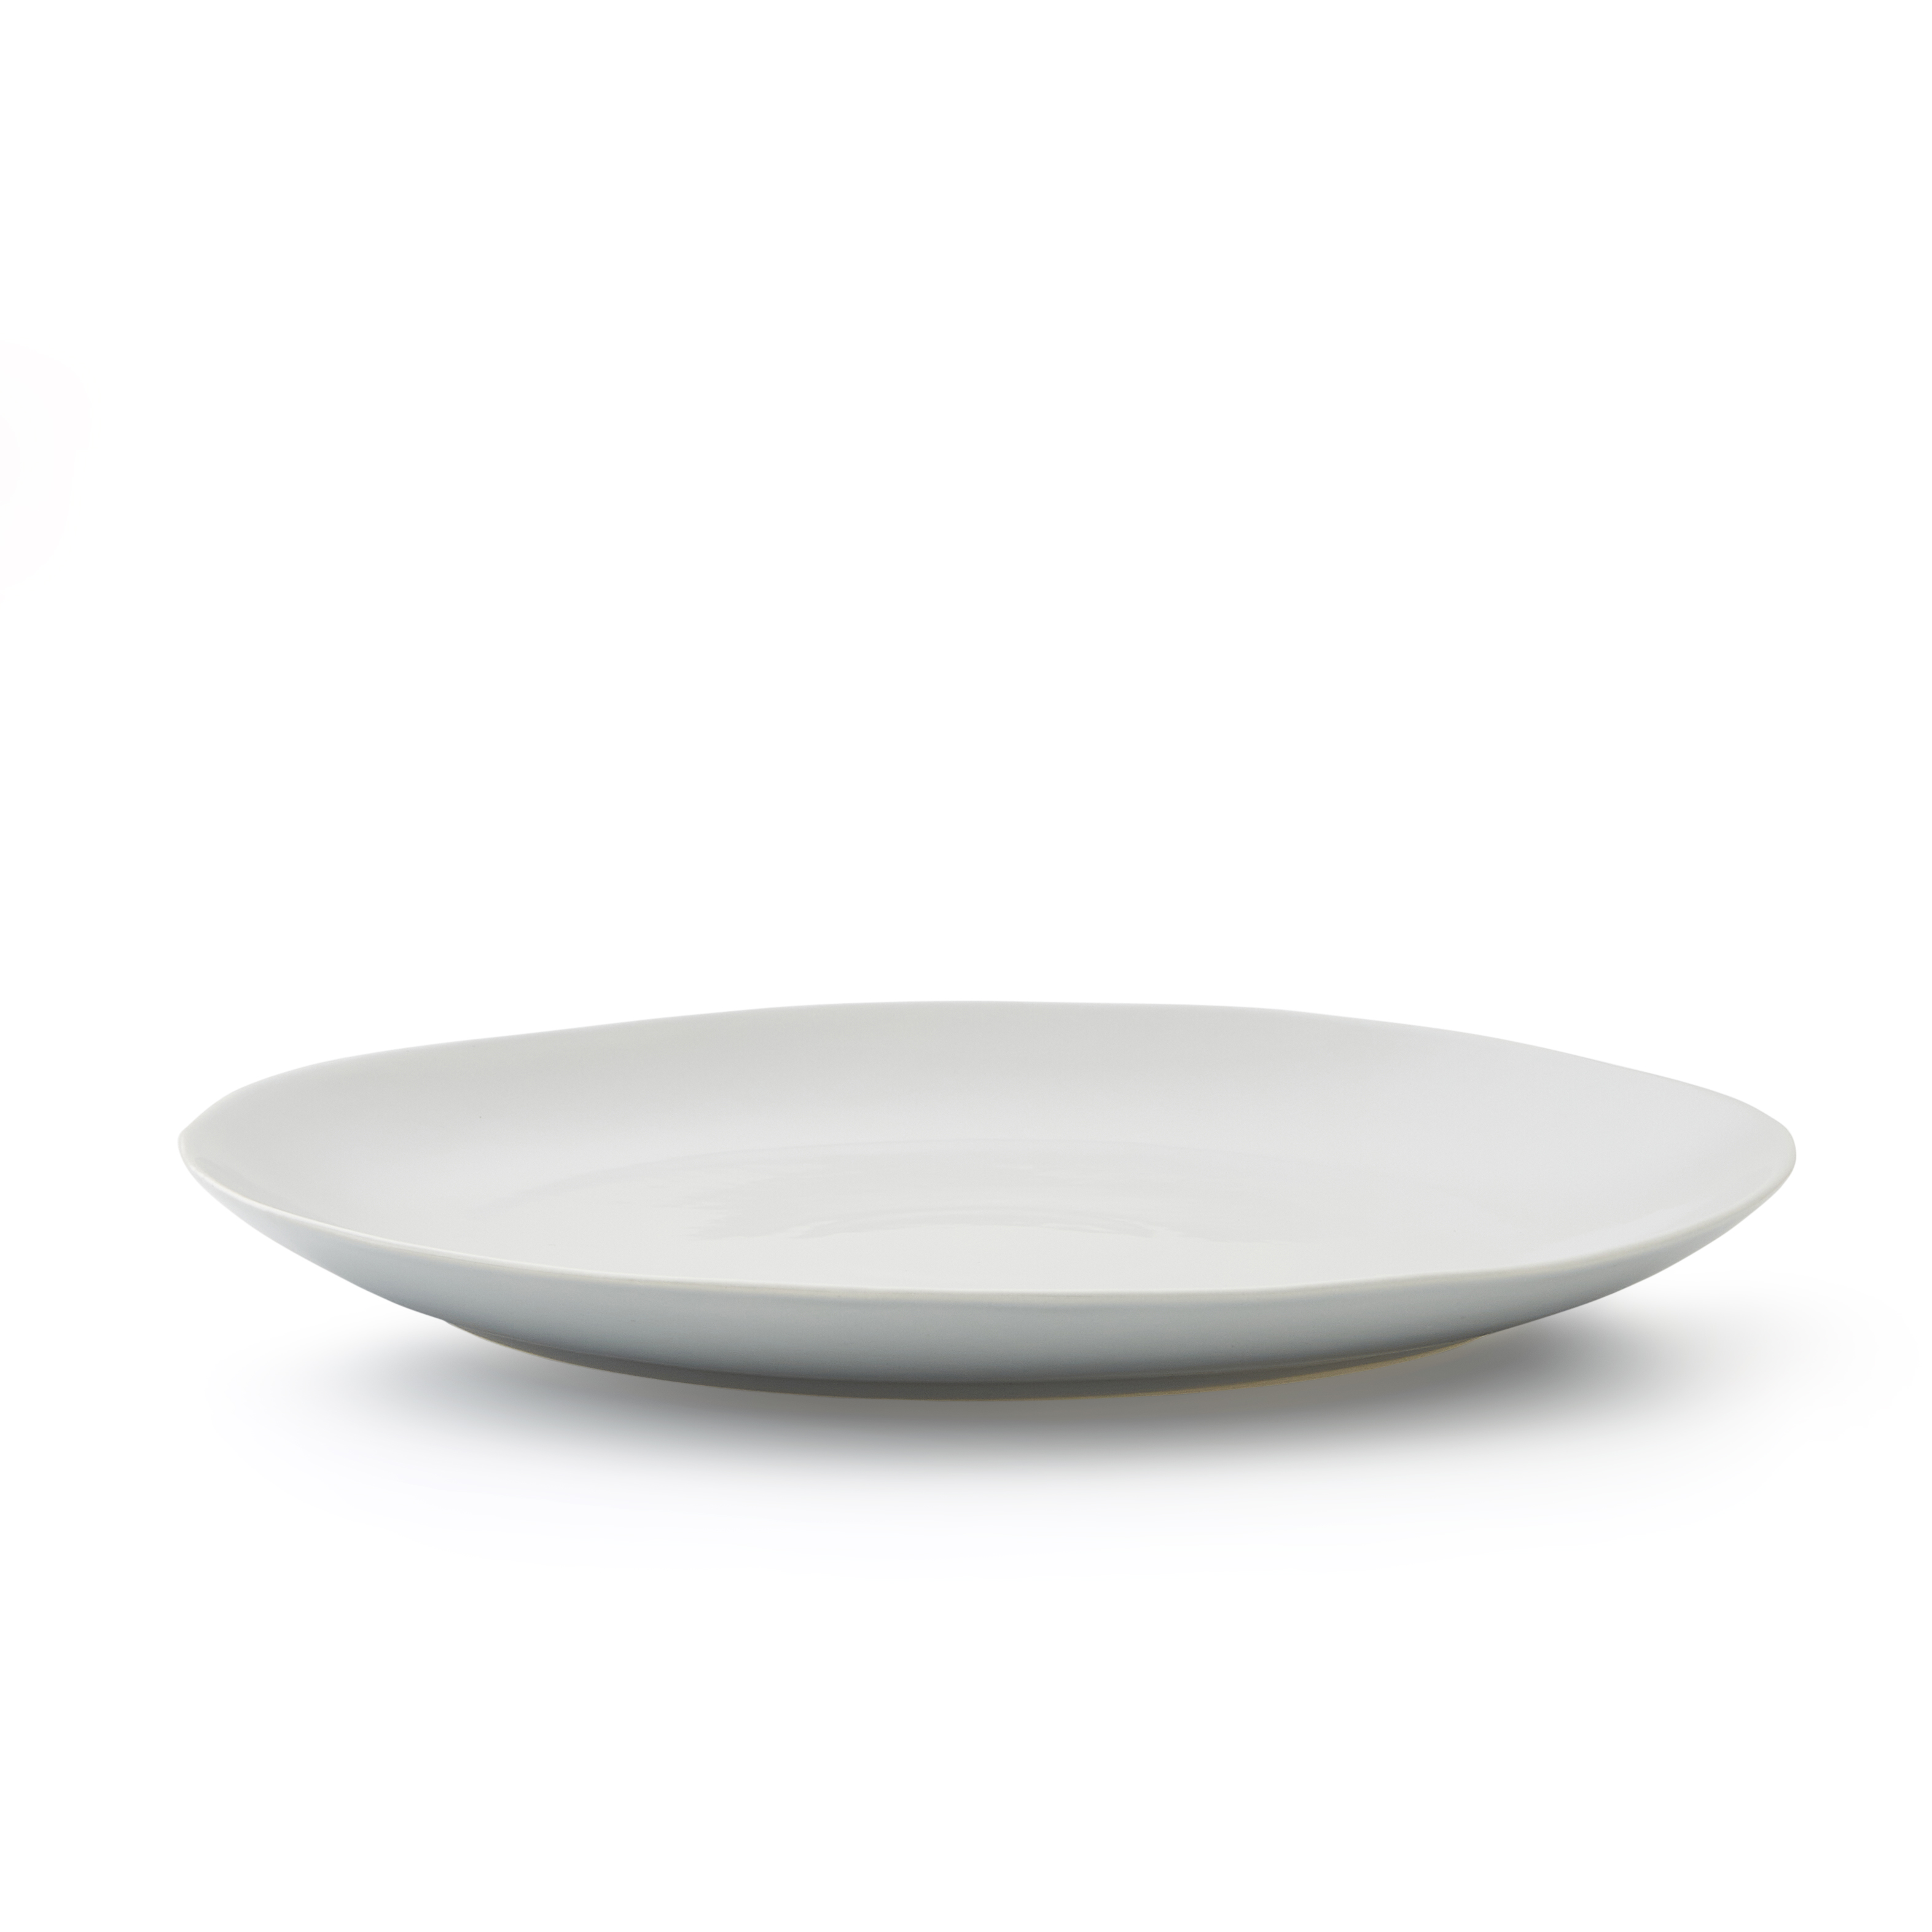 Sophie Conran Arbor Large Serving Platter- Dove Grey image number null